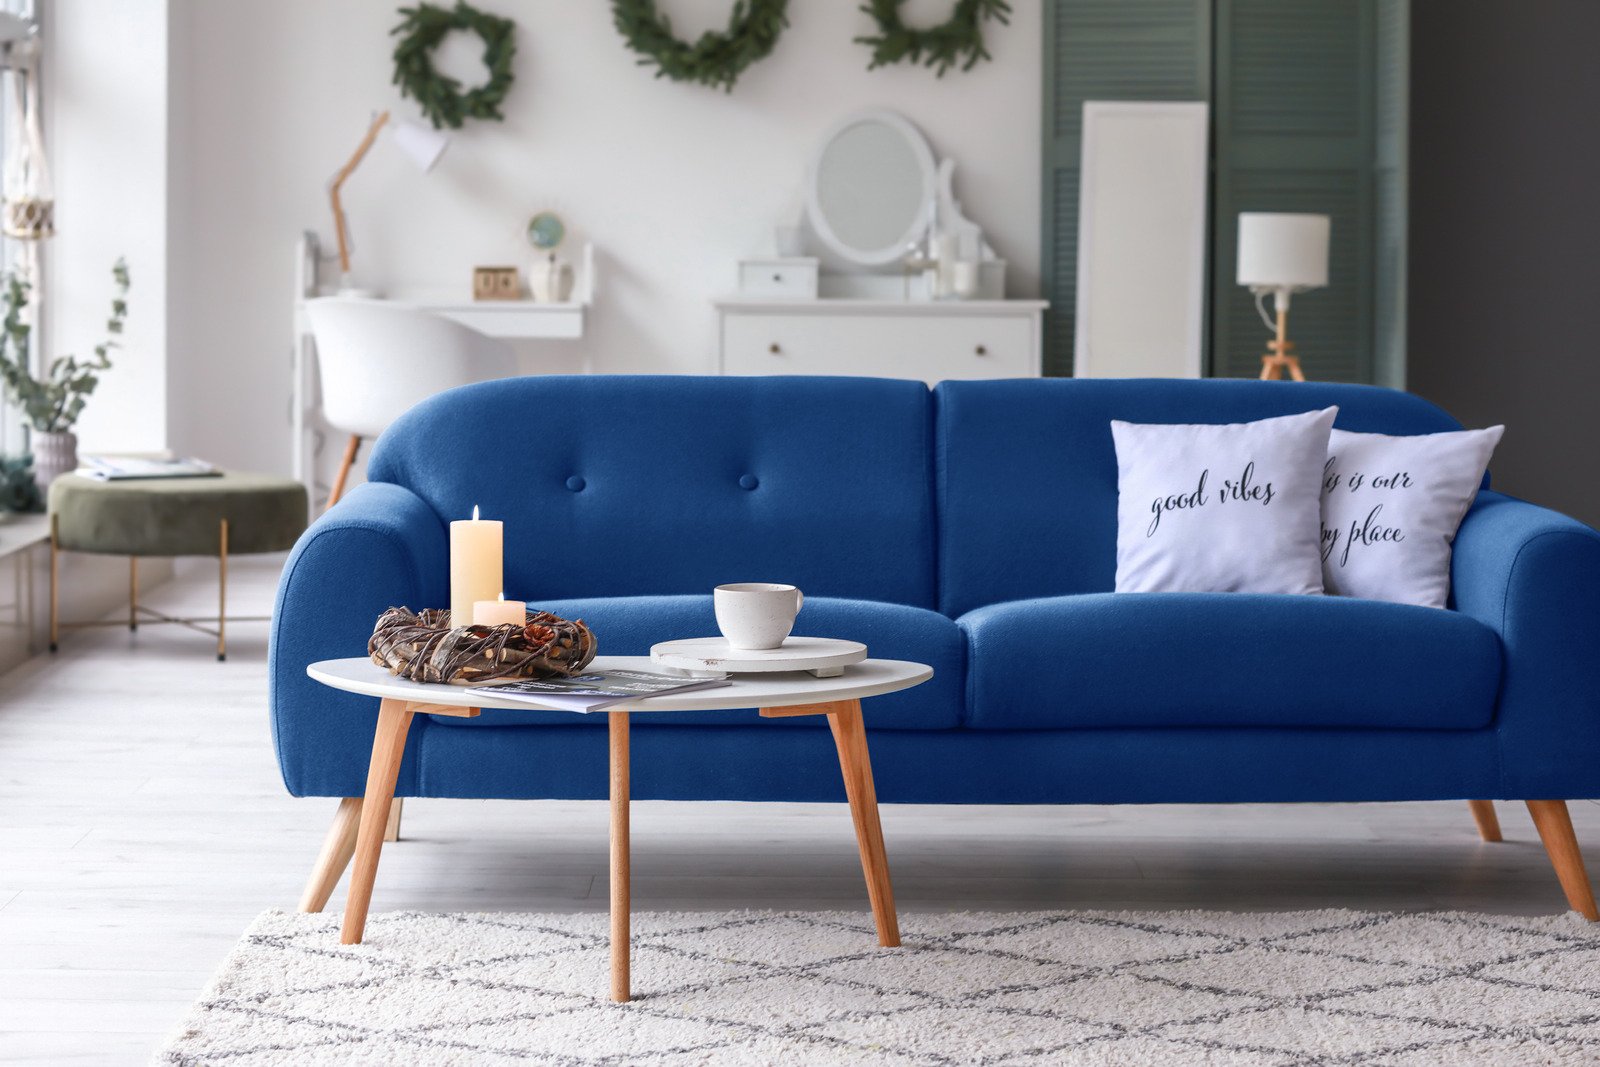 niebieska sofa